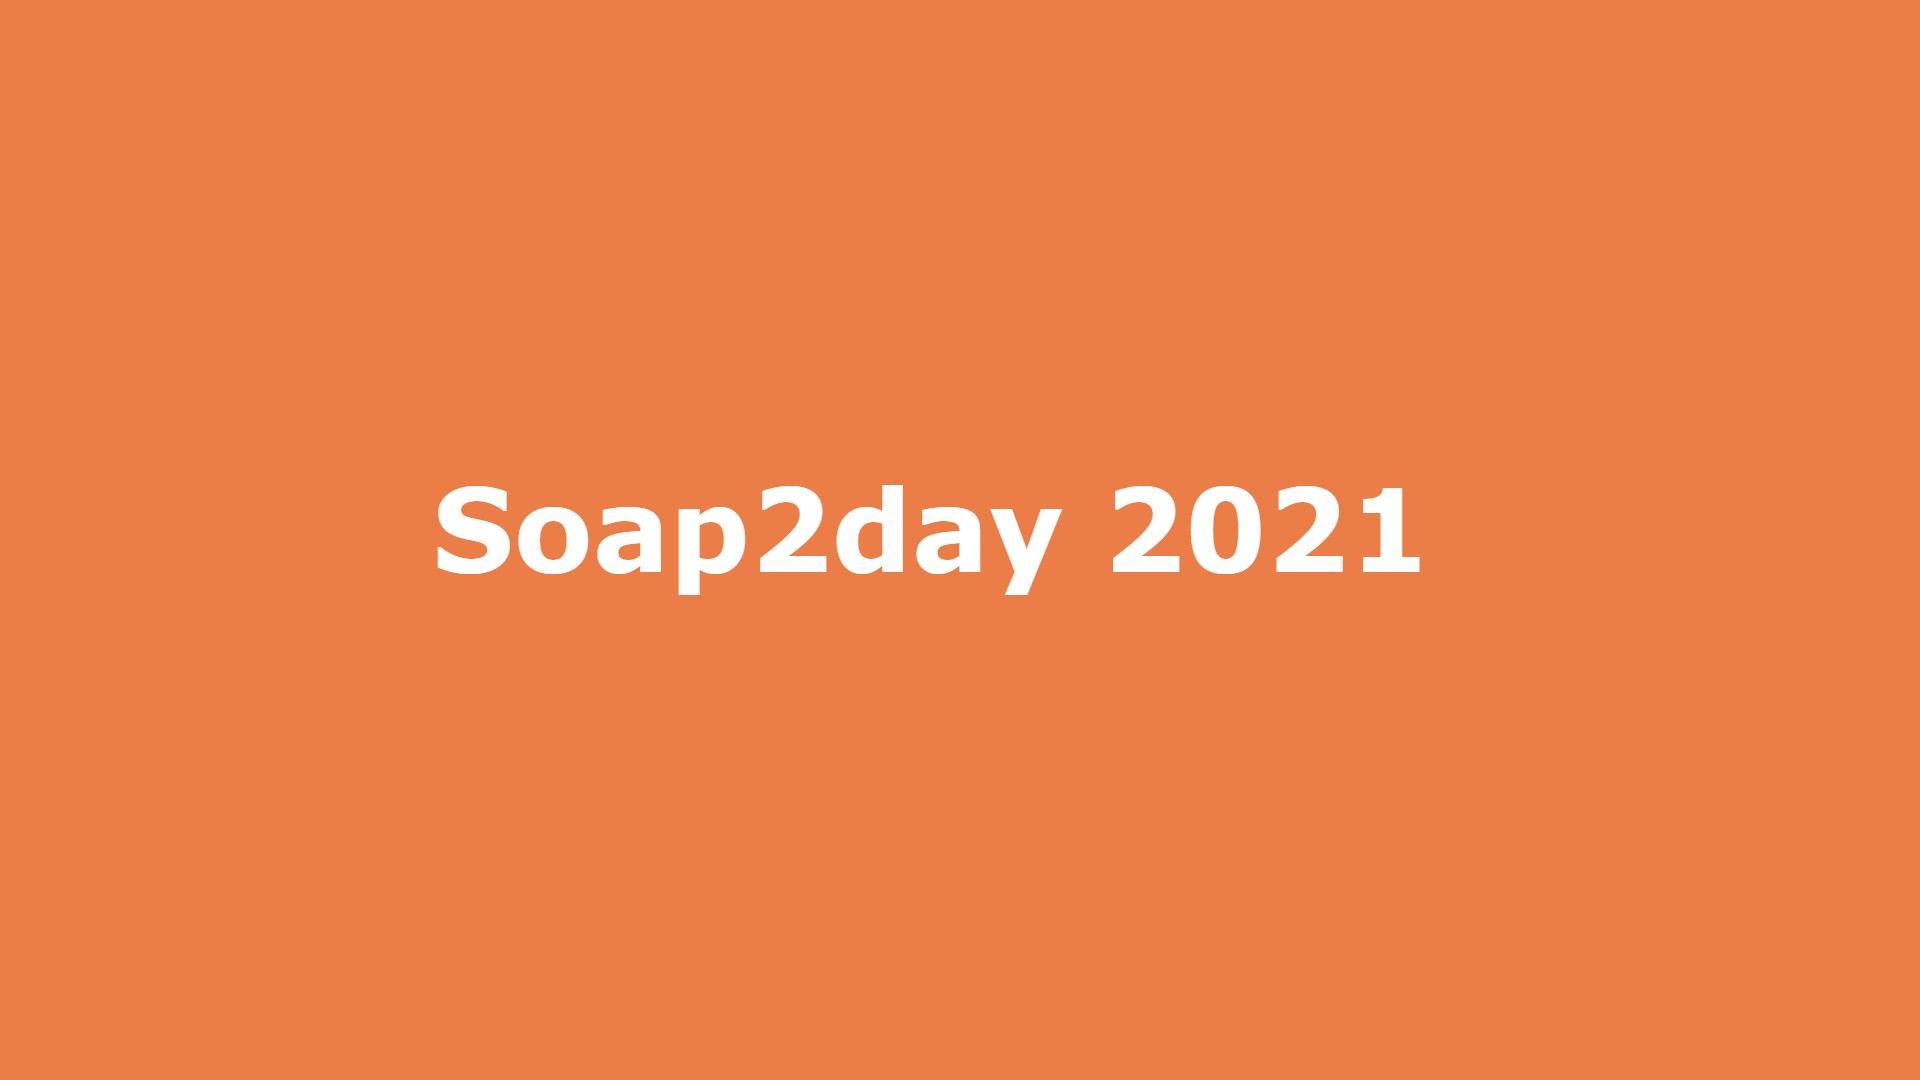 soap2day im unblocked